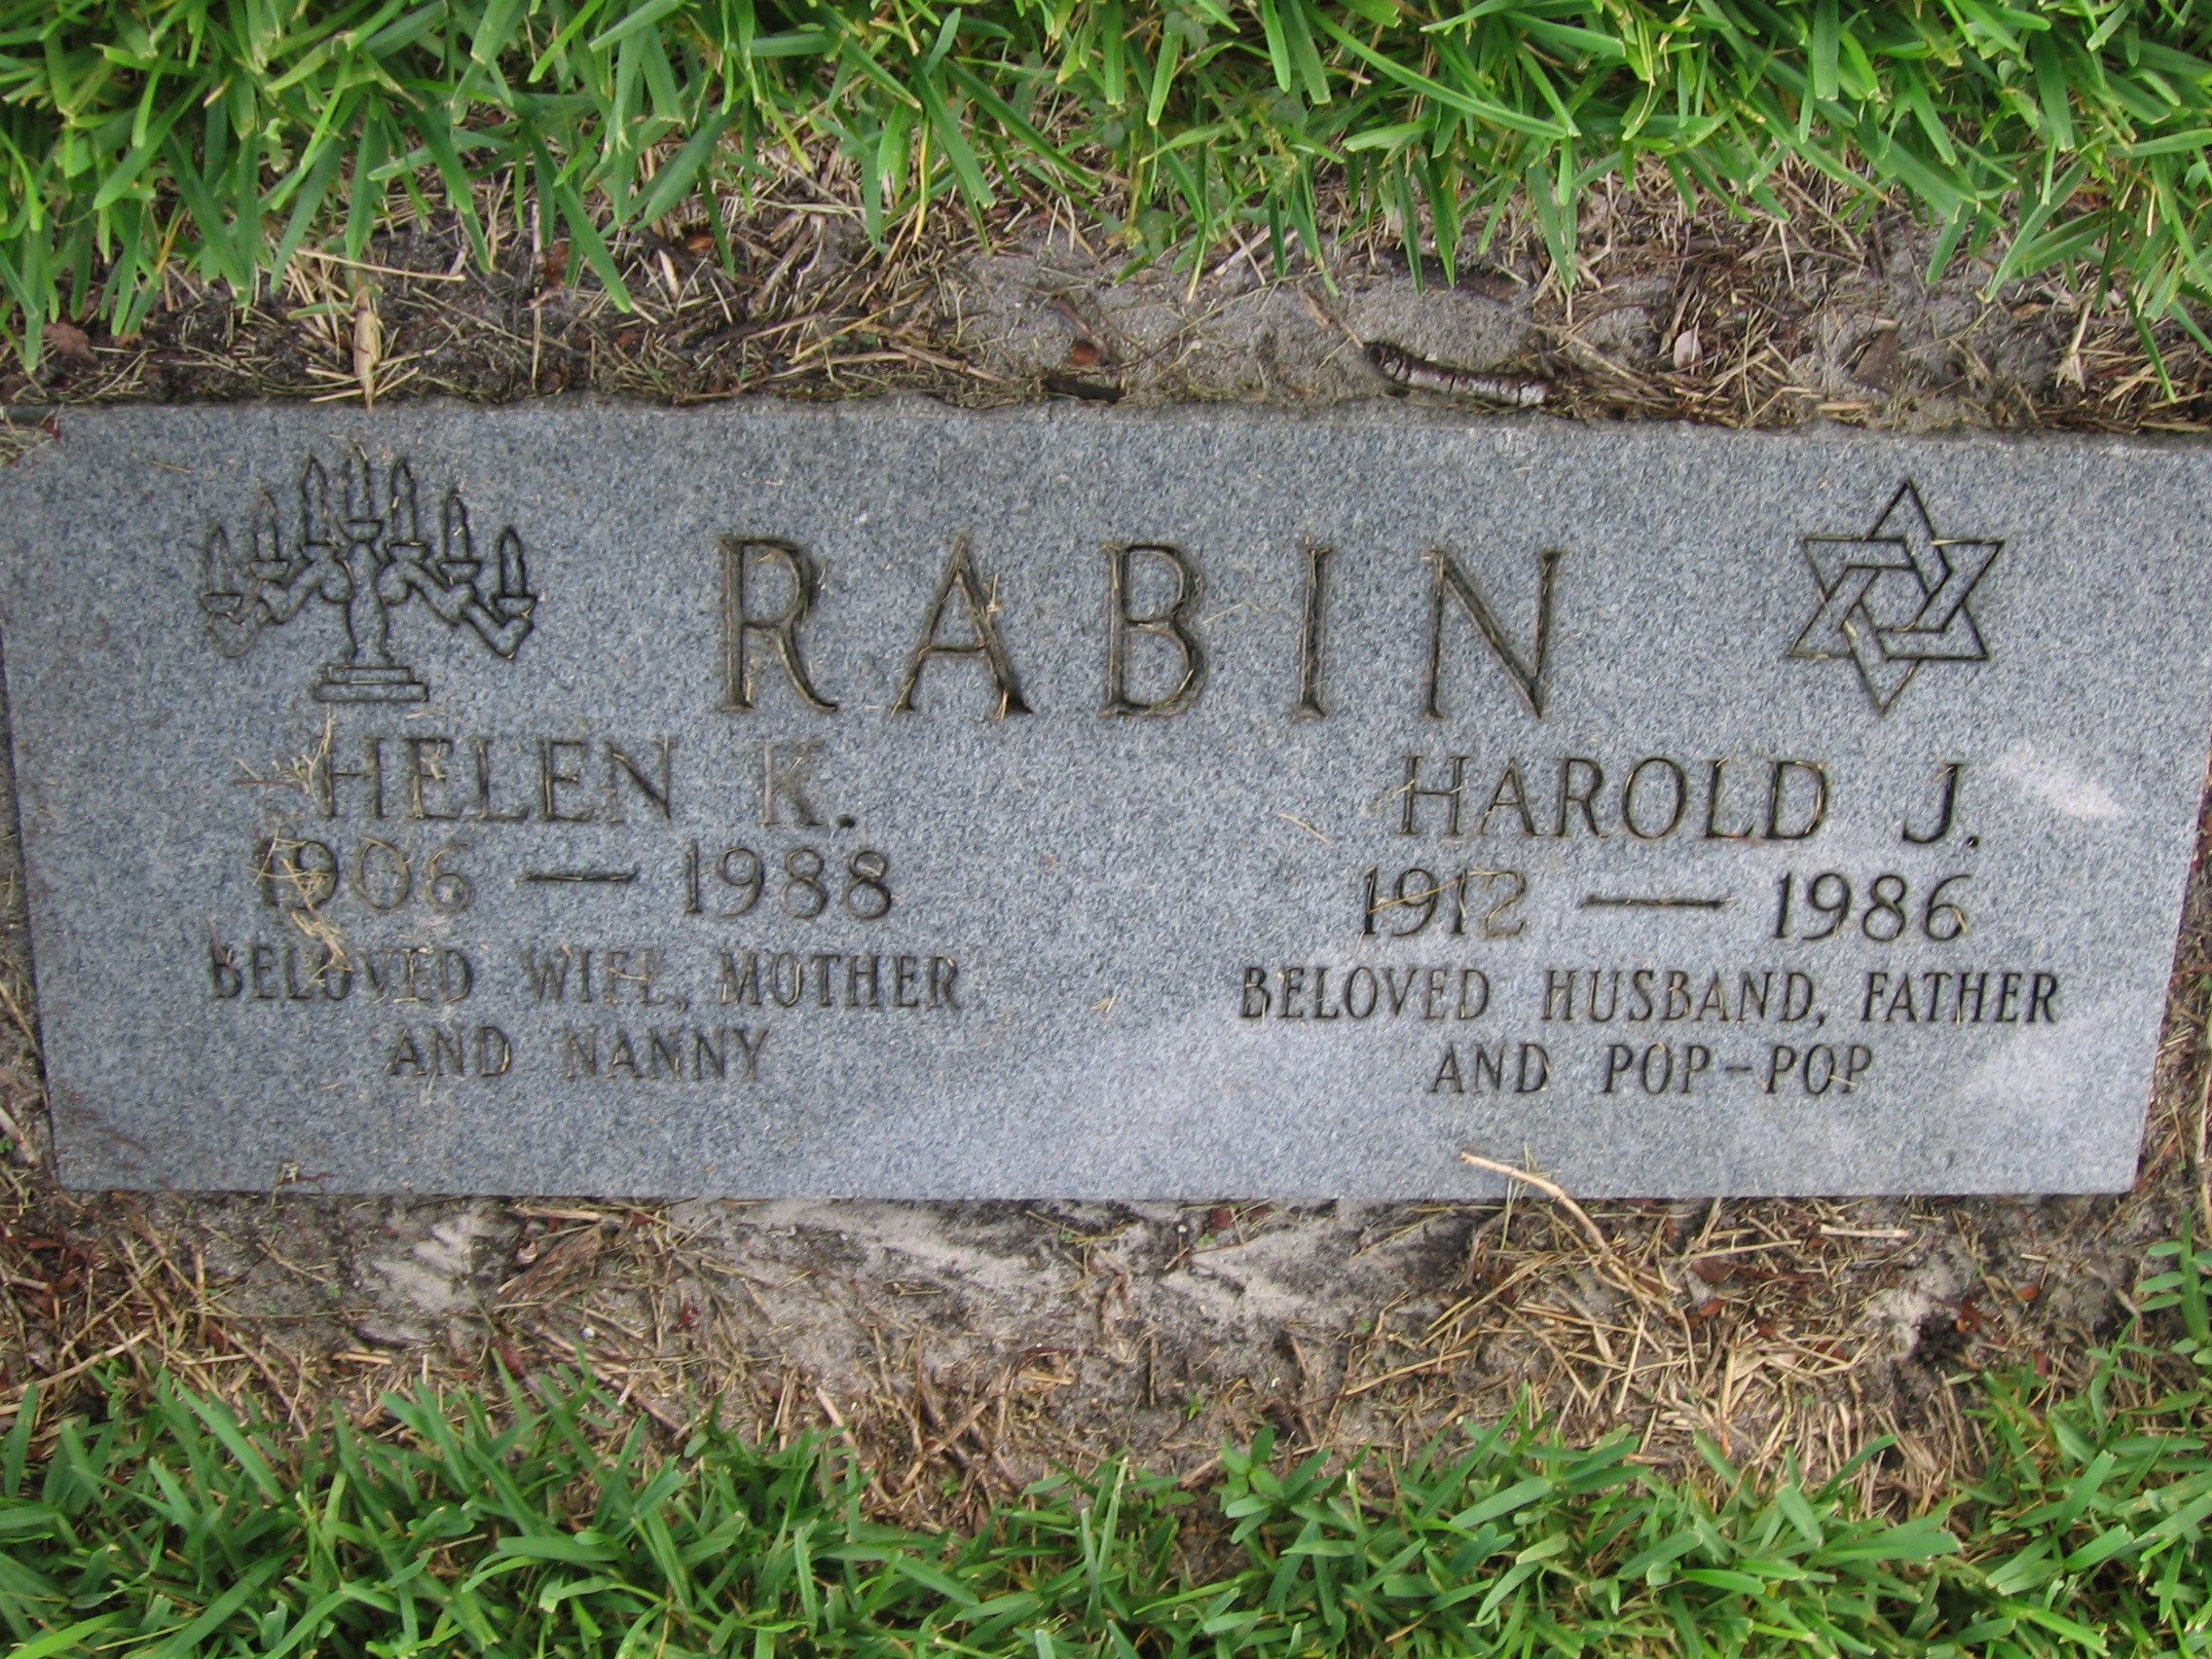 Harold J Rabin